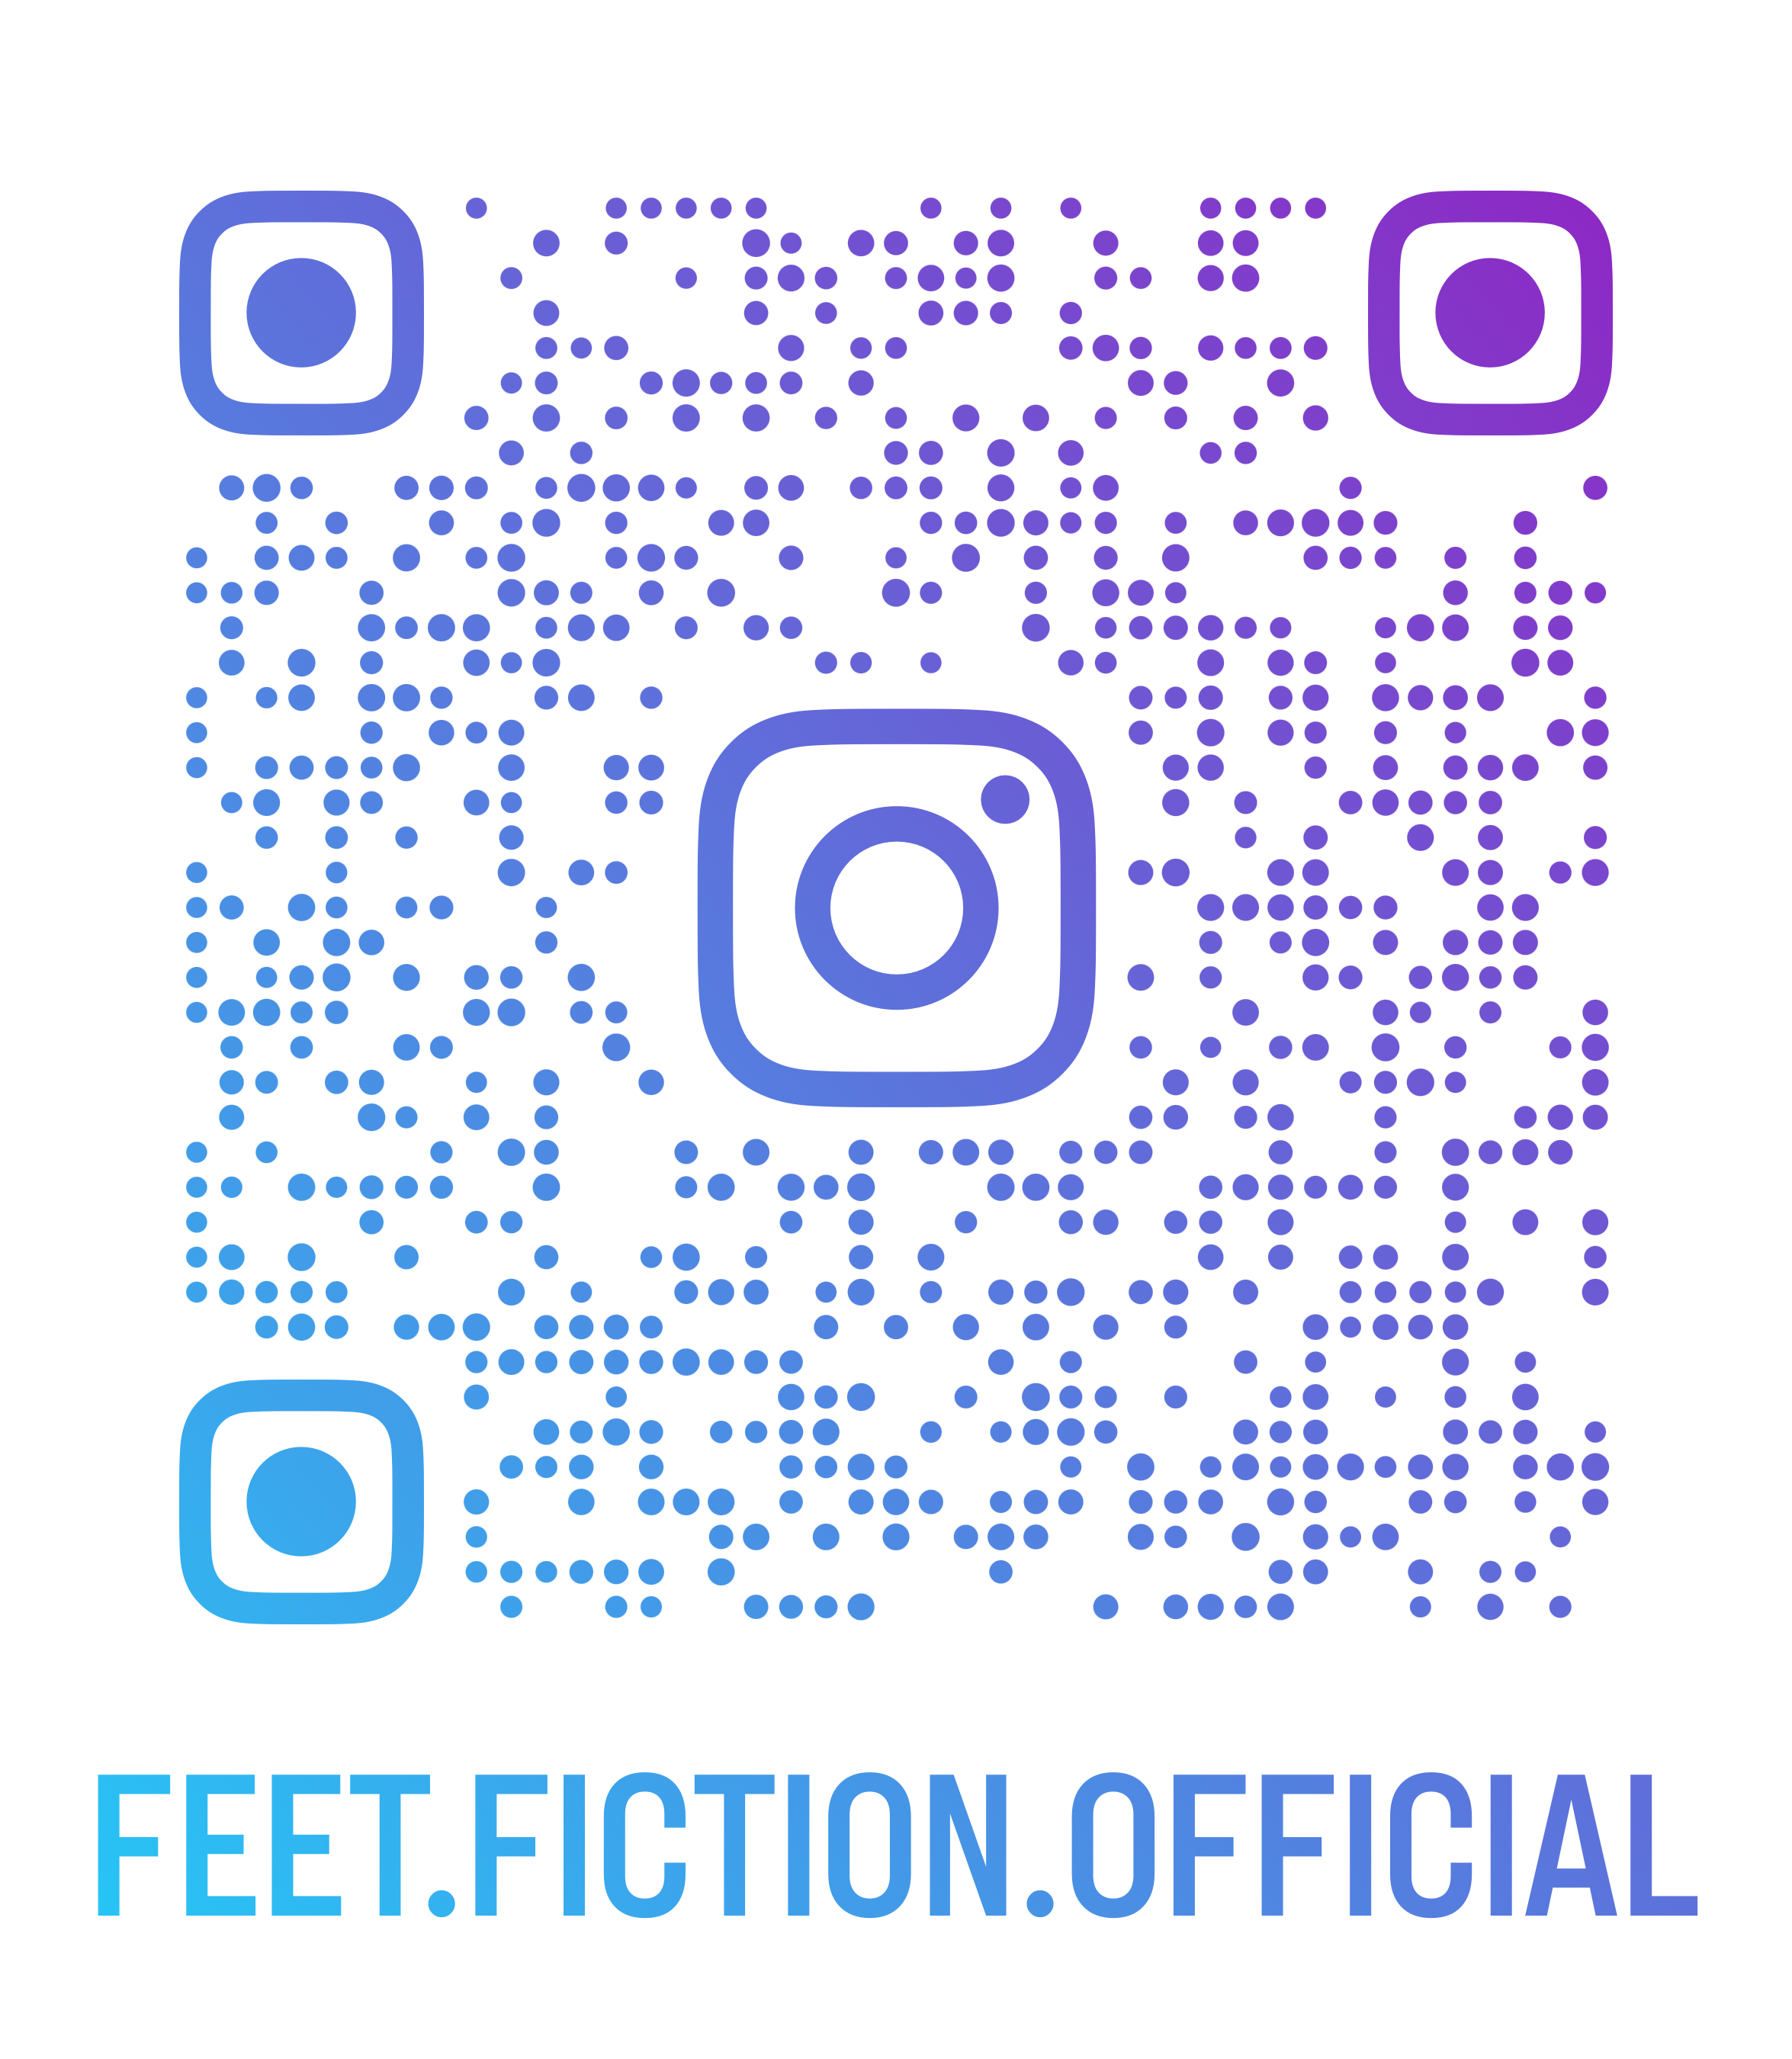 feet.fiction.official